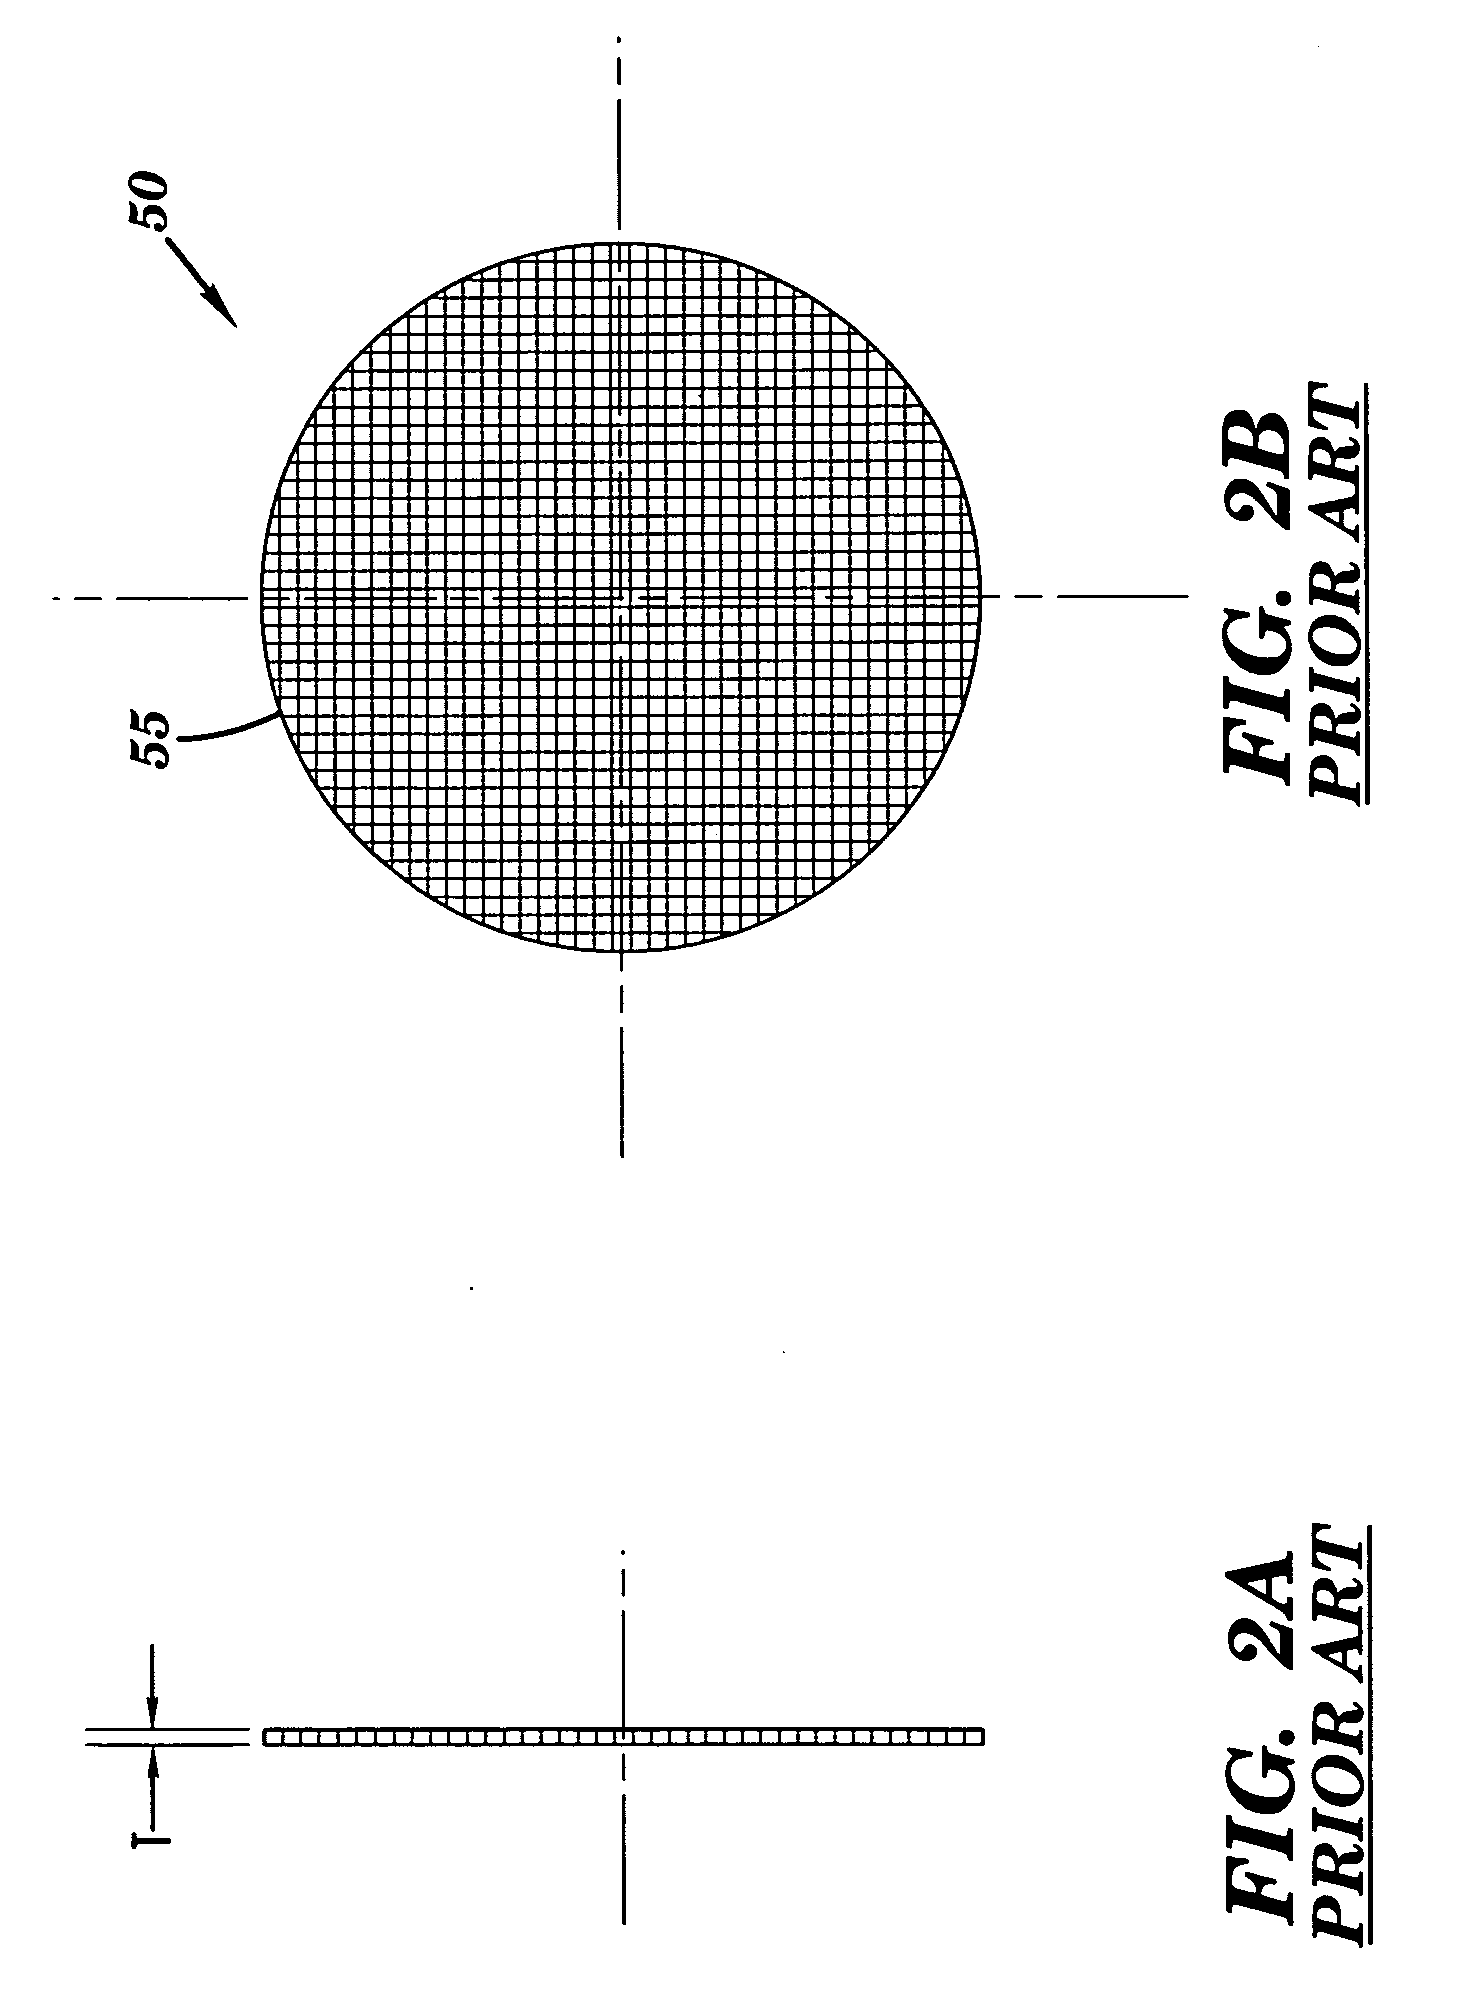 Regenerator matrix with mixed screen configuration